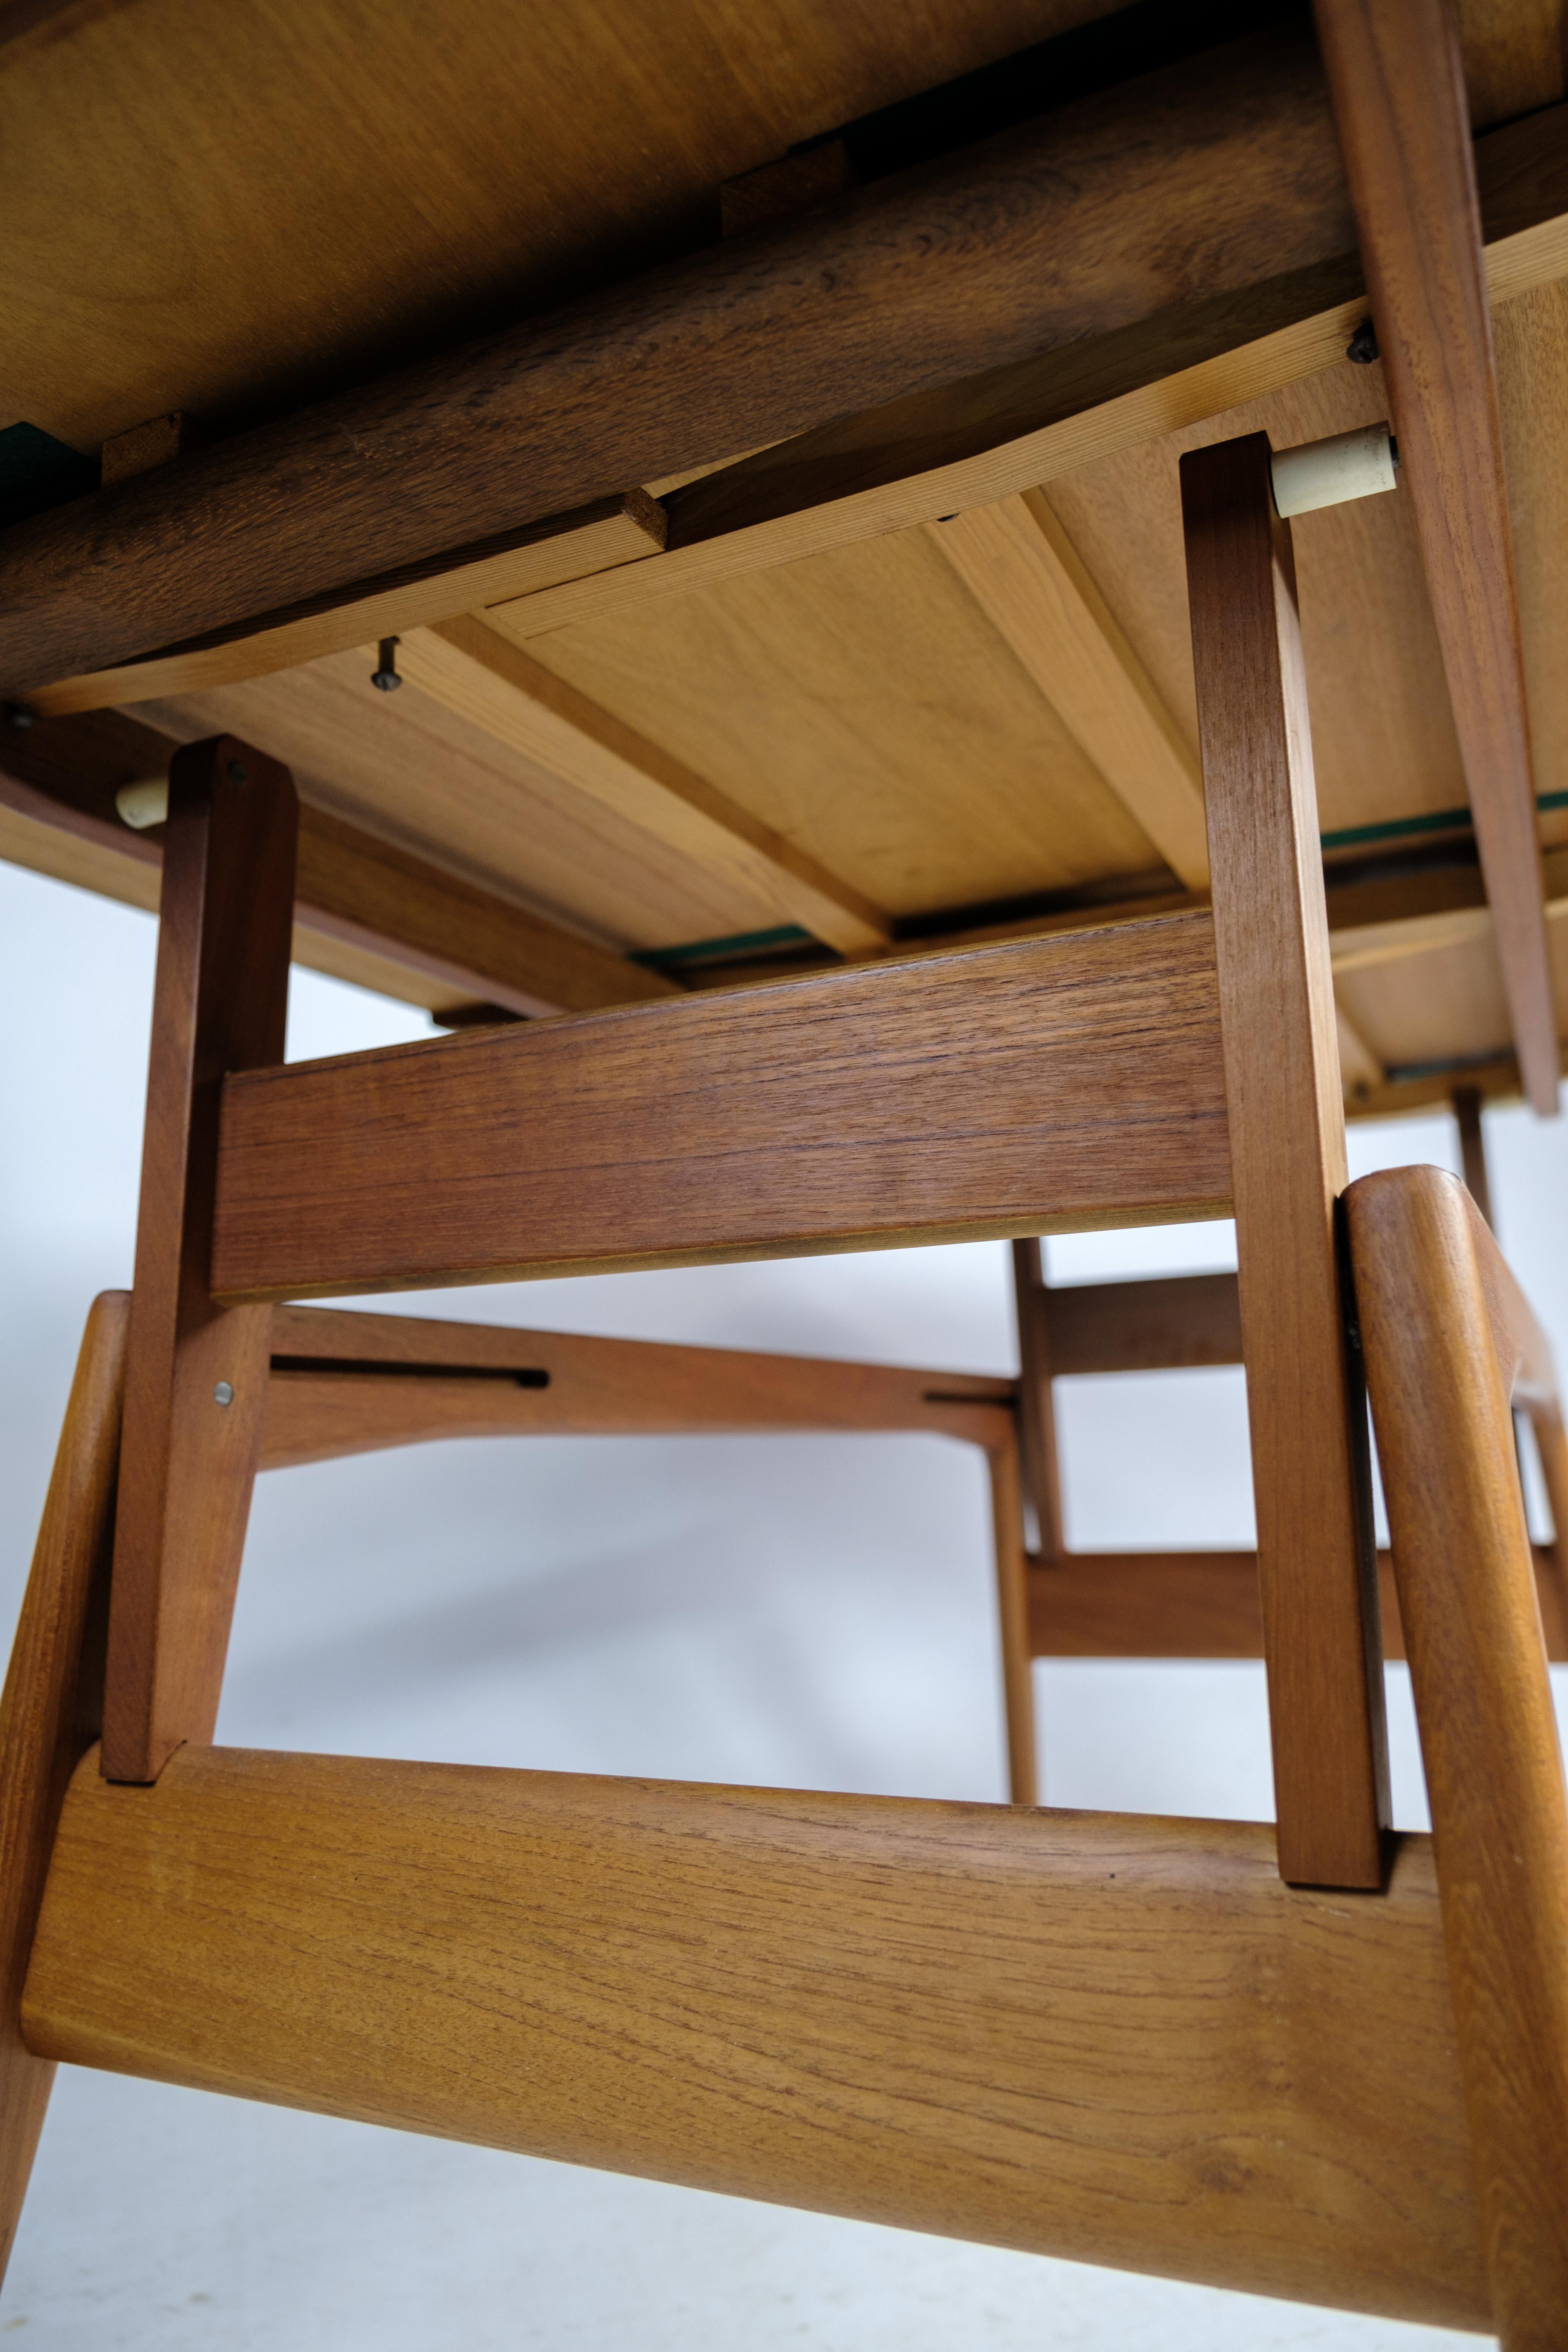 Mid-20th Century Coffee Table / Dining Table, Teak Wood, Copenhagen Table, Danish Furniture Manuf For Sale